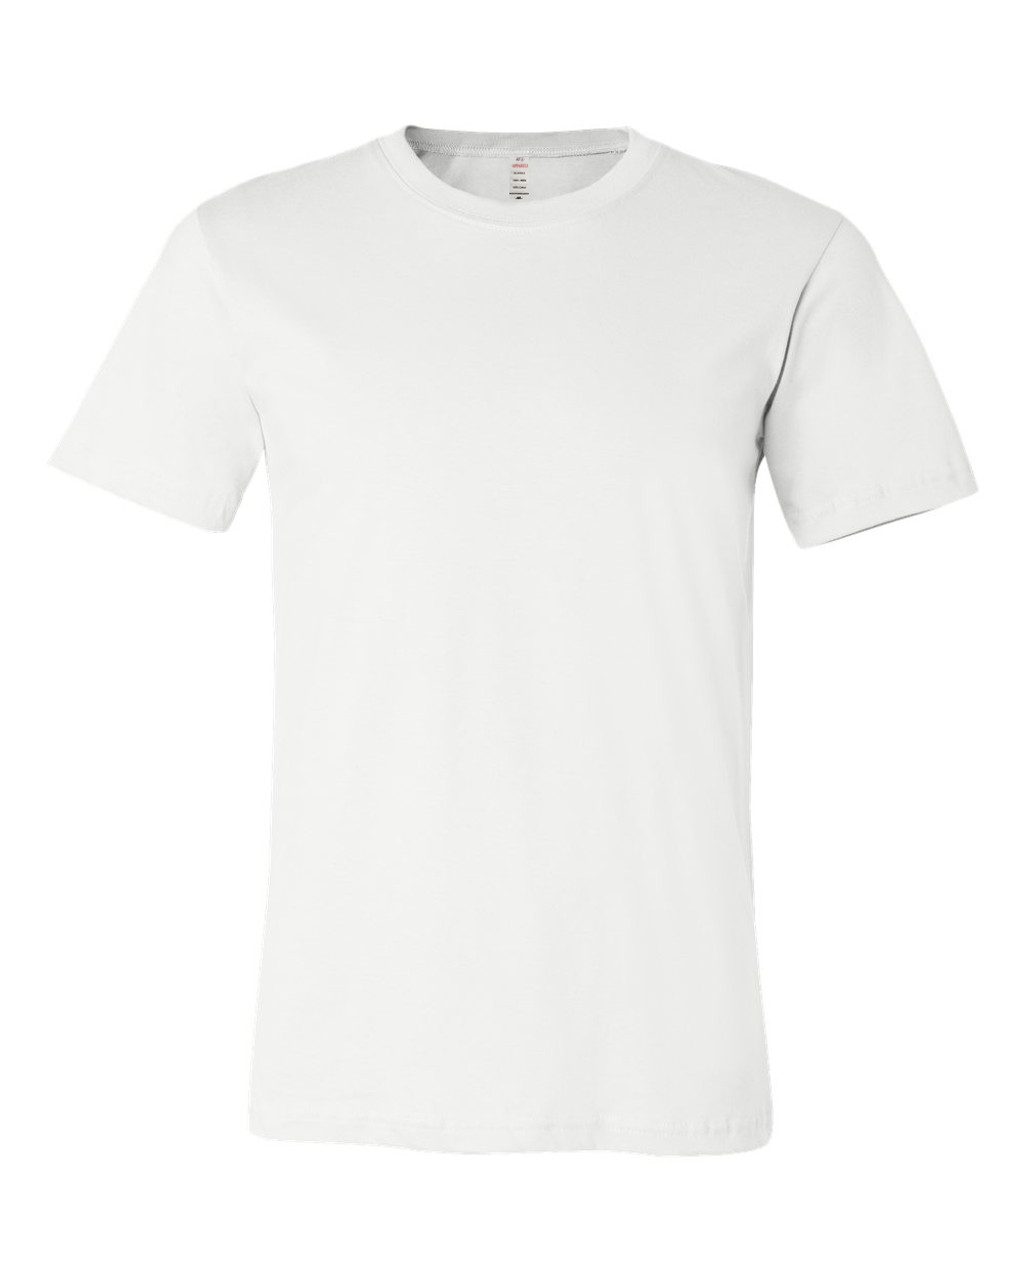 American Made Shirts  T-Shirts and Bulk Blank Shirts Wholesale